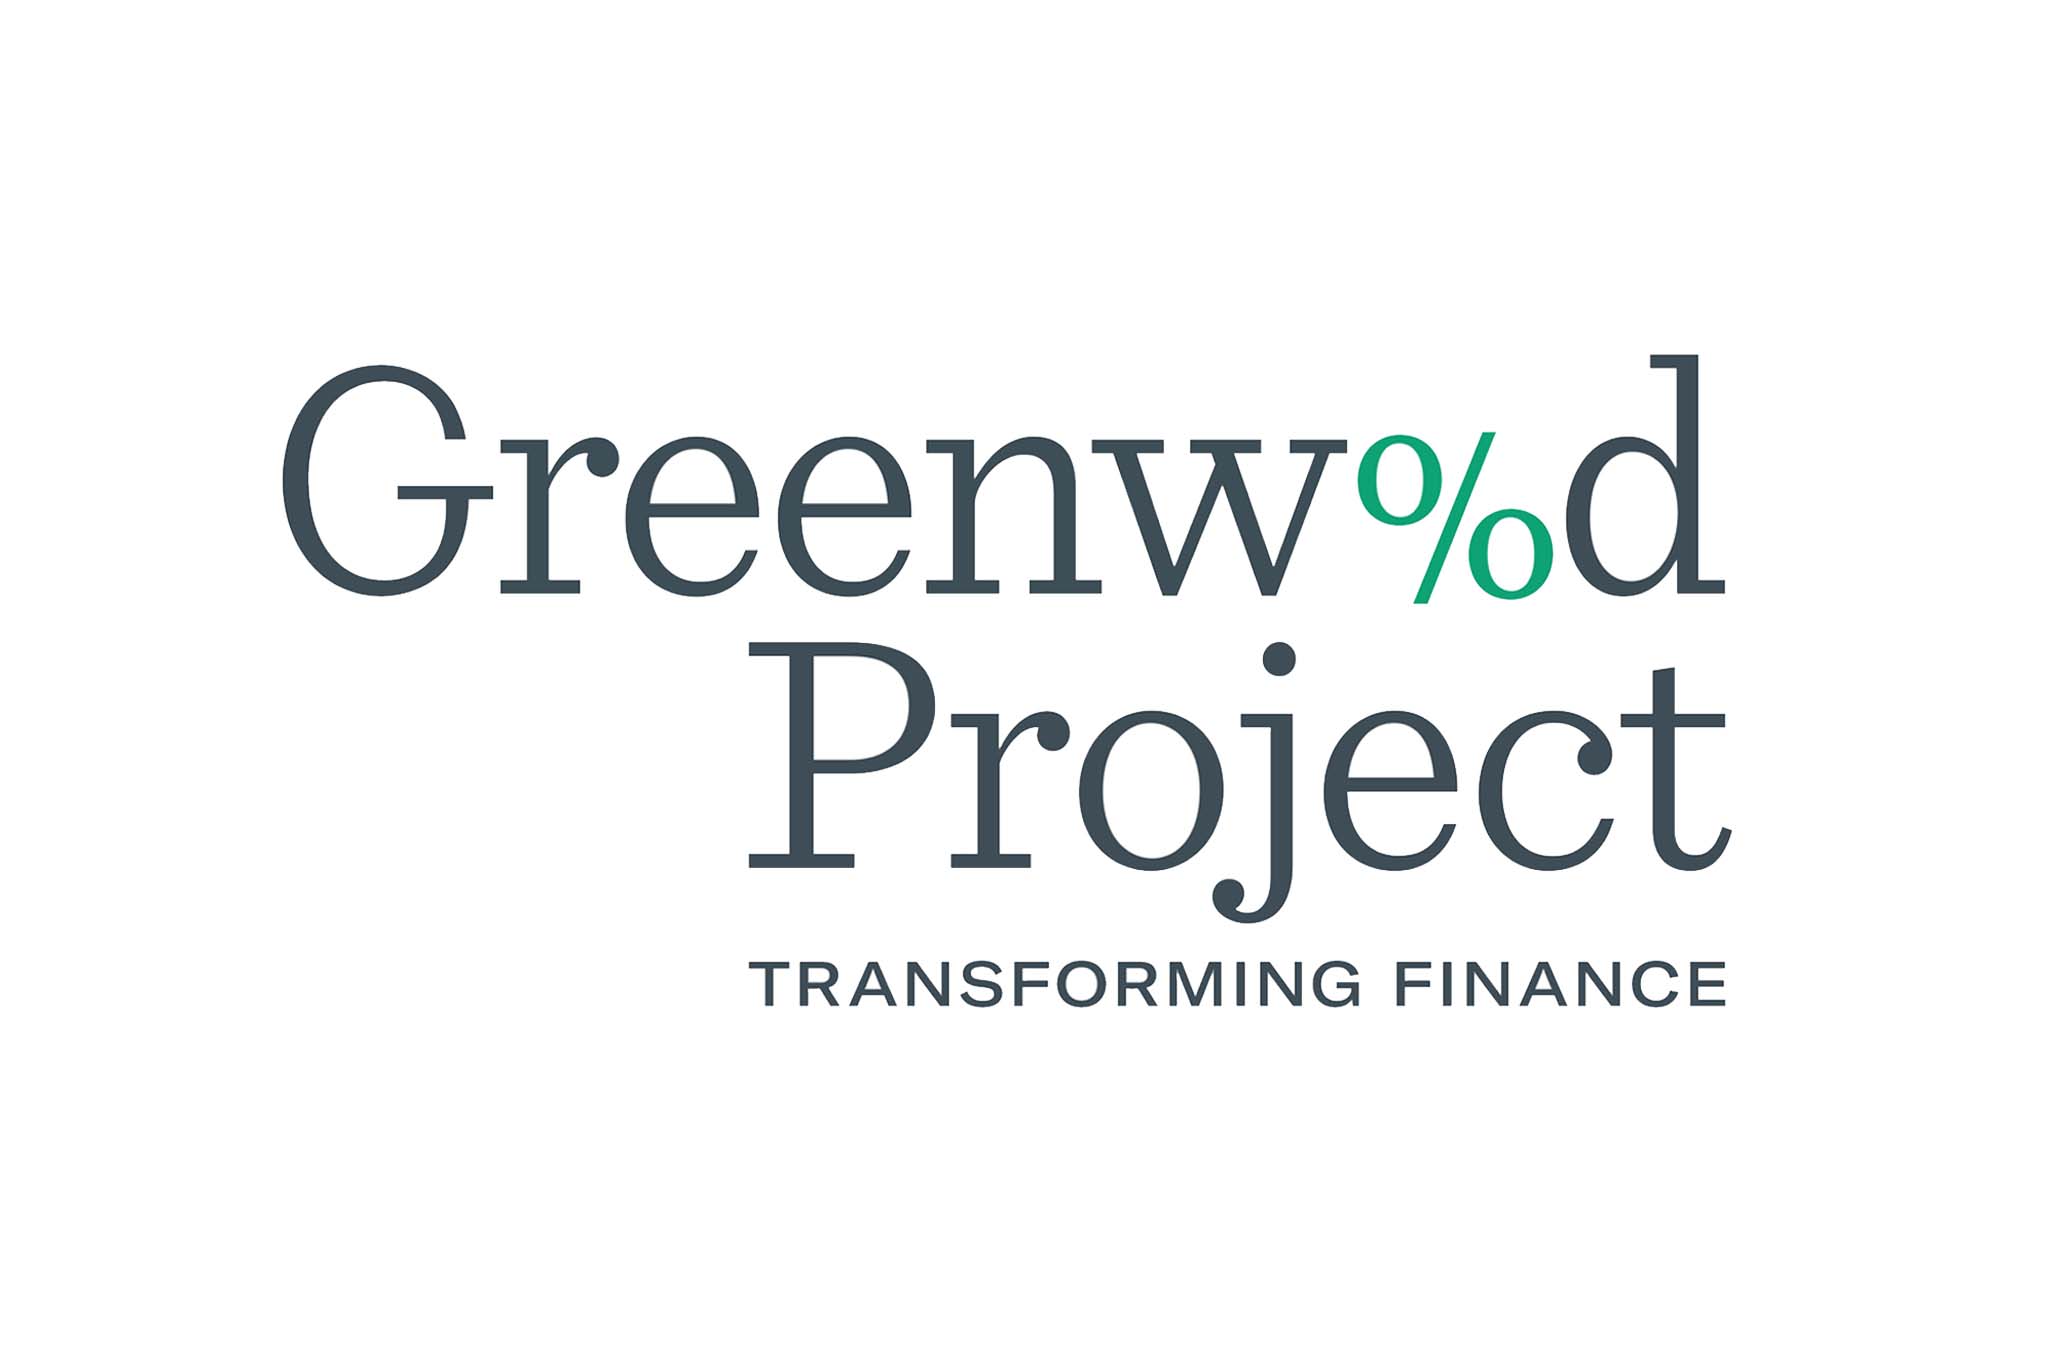 Greenwood Project Logo